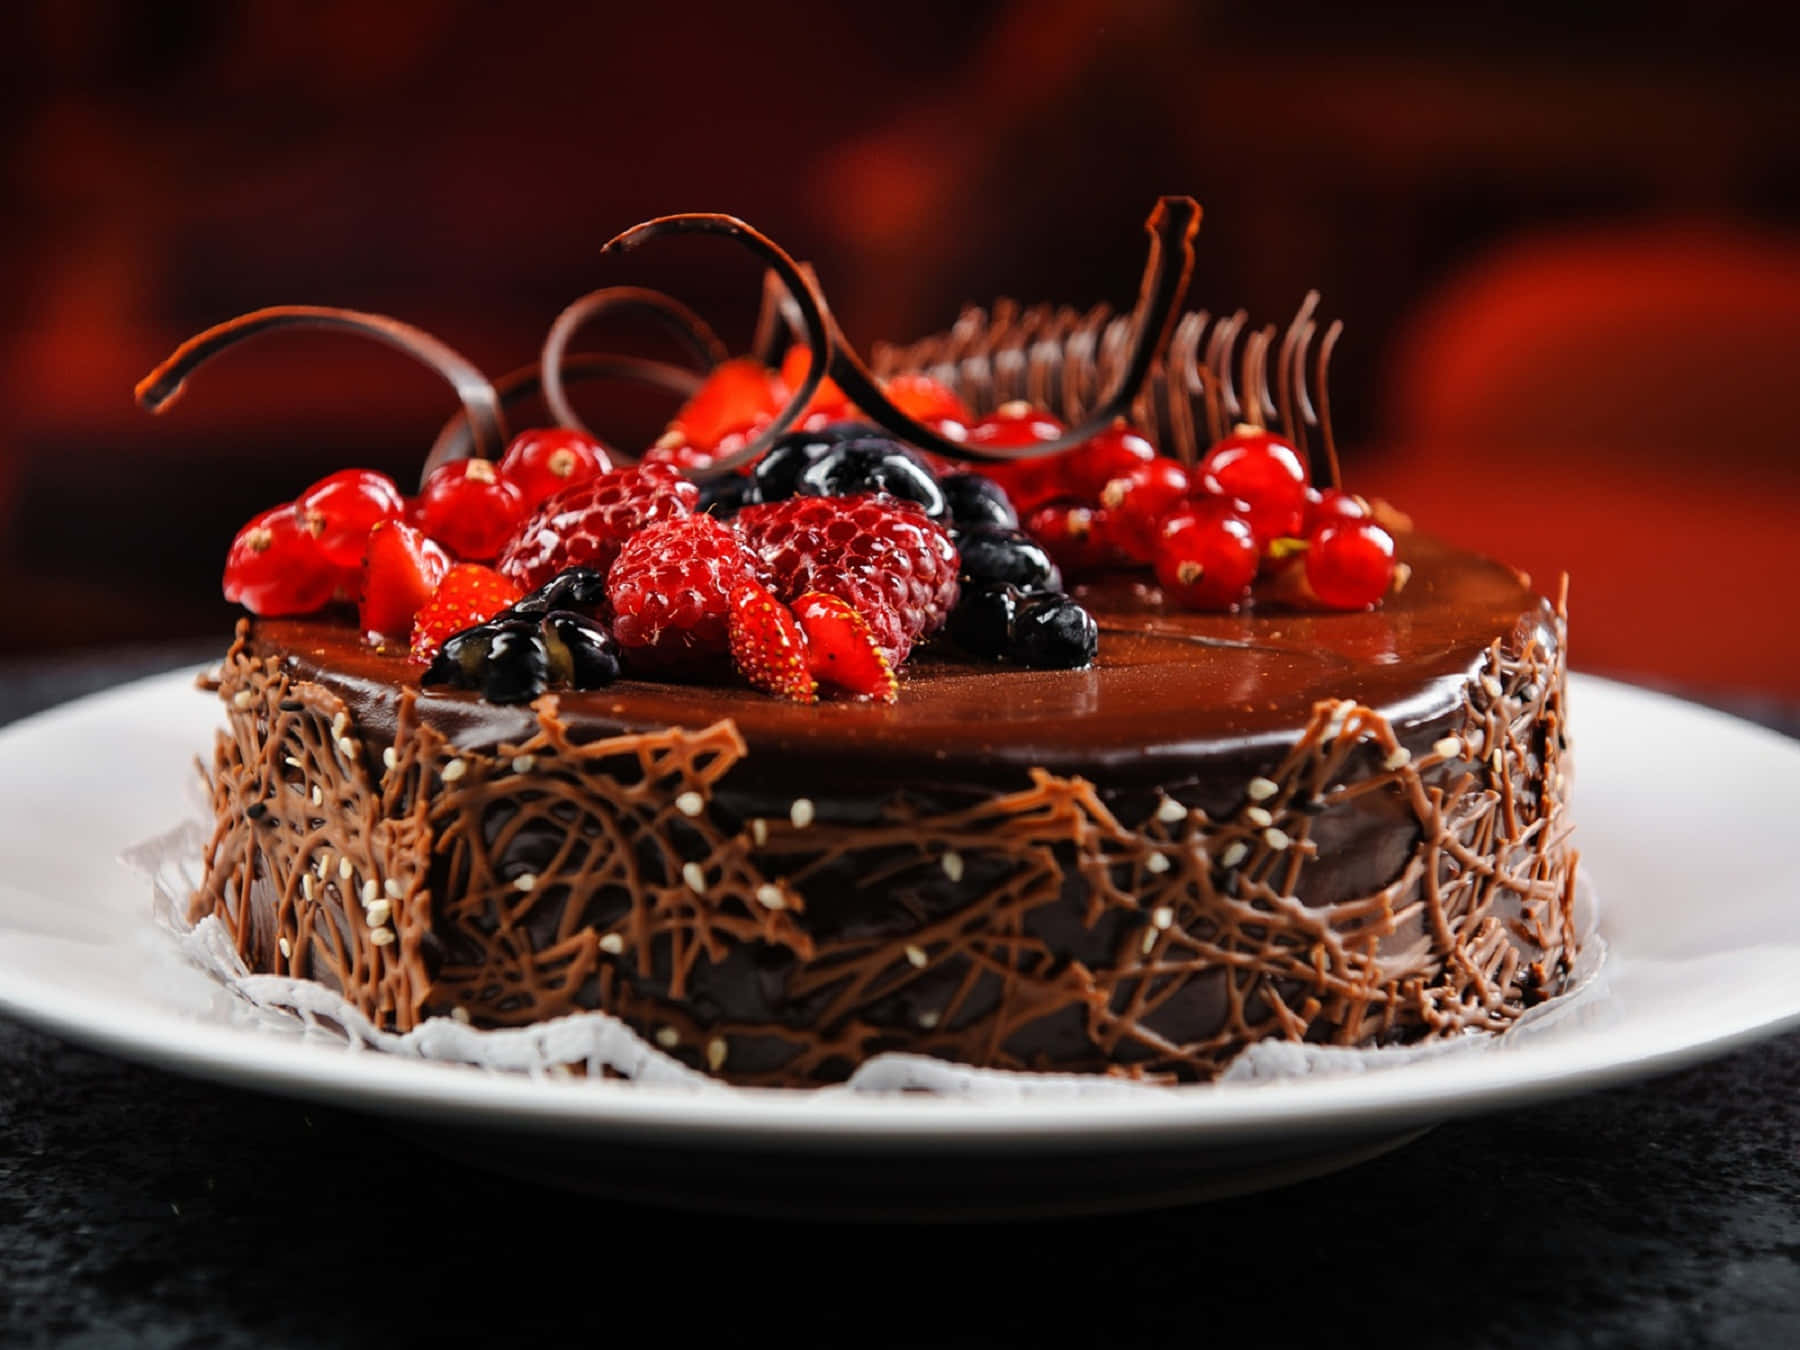 Yummy Chocolate Cake With Fruits